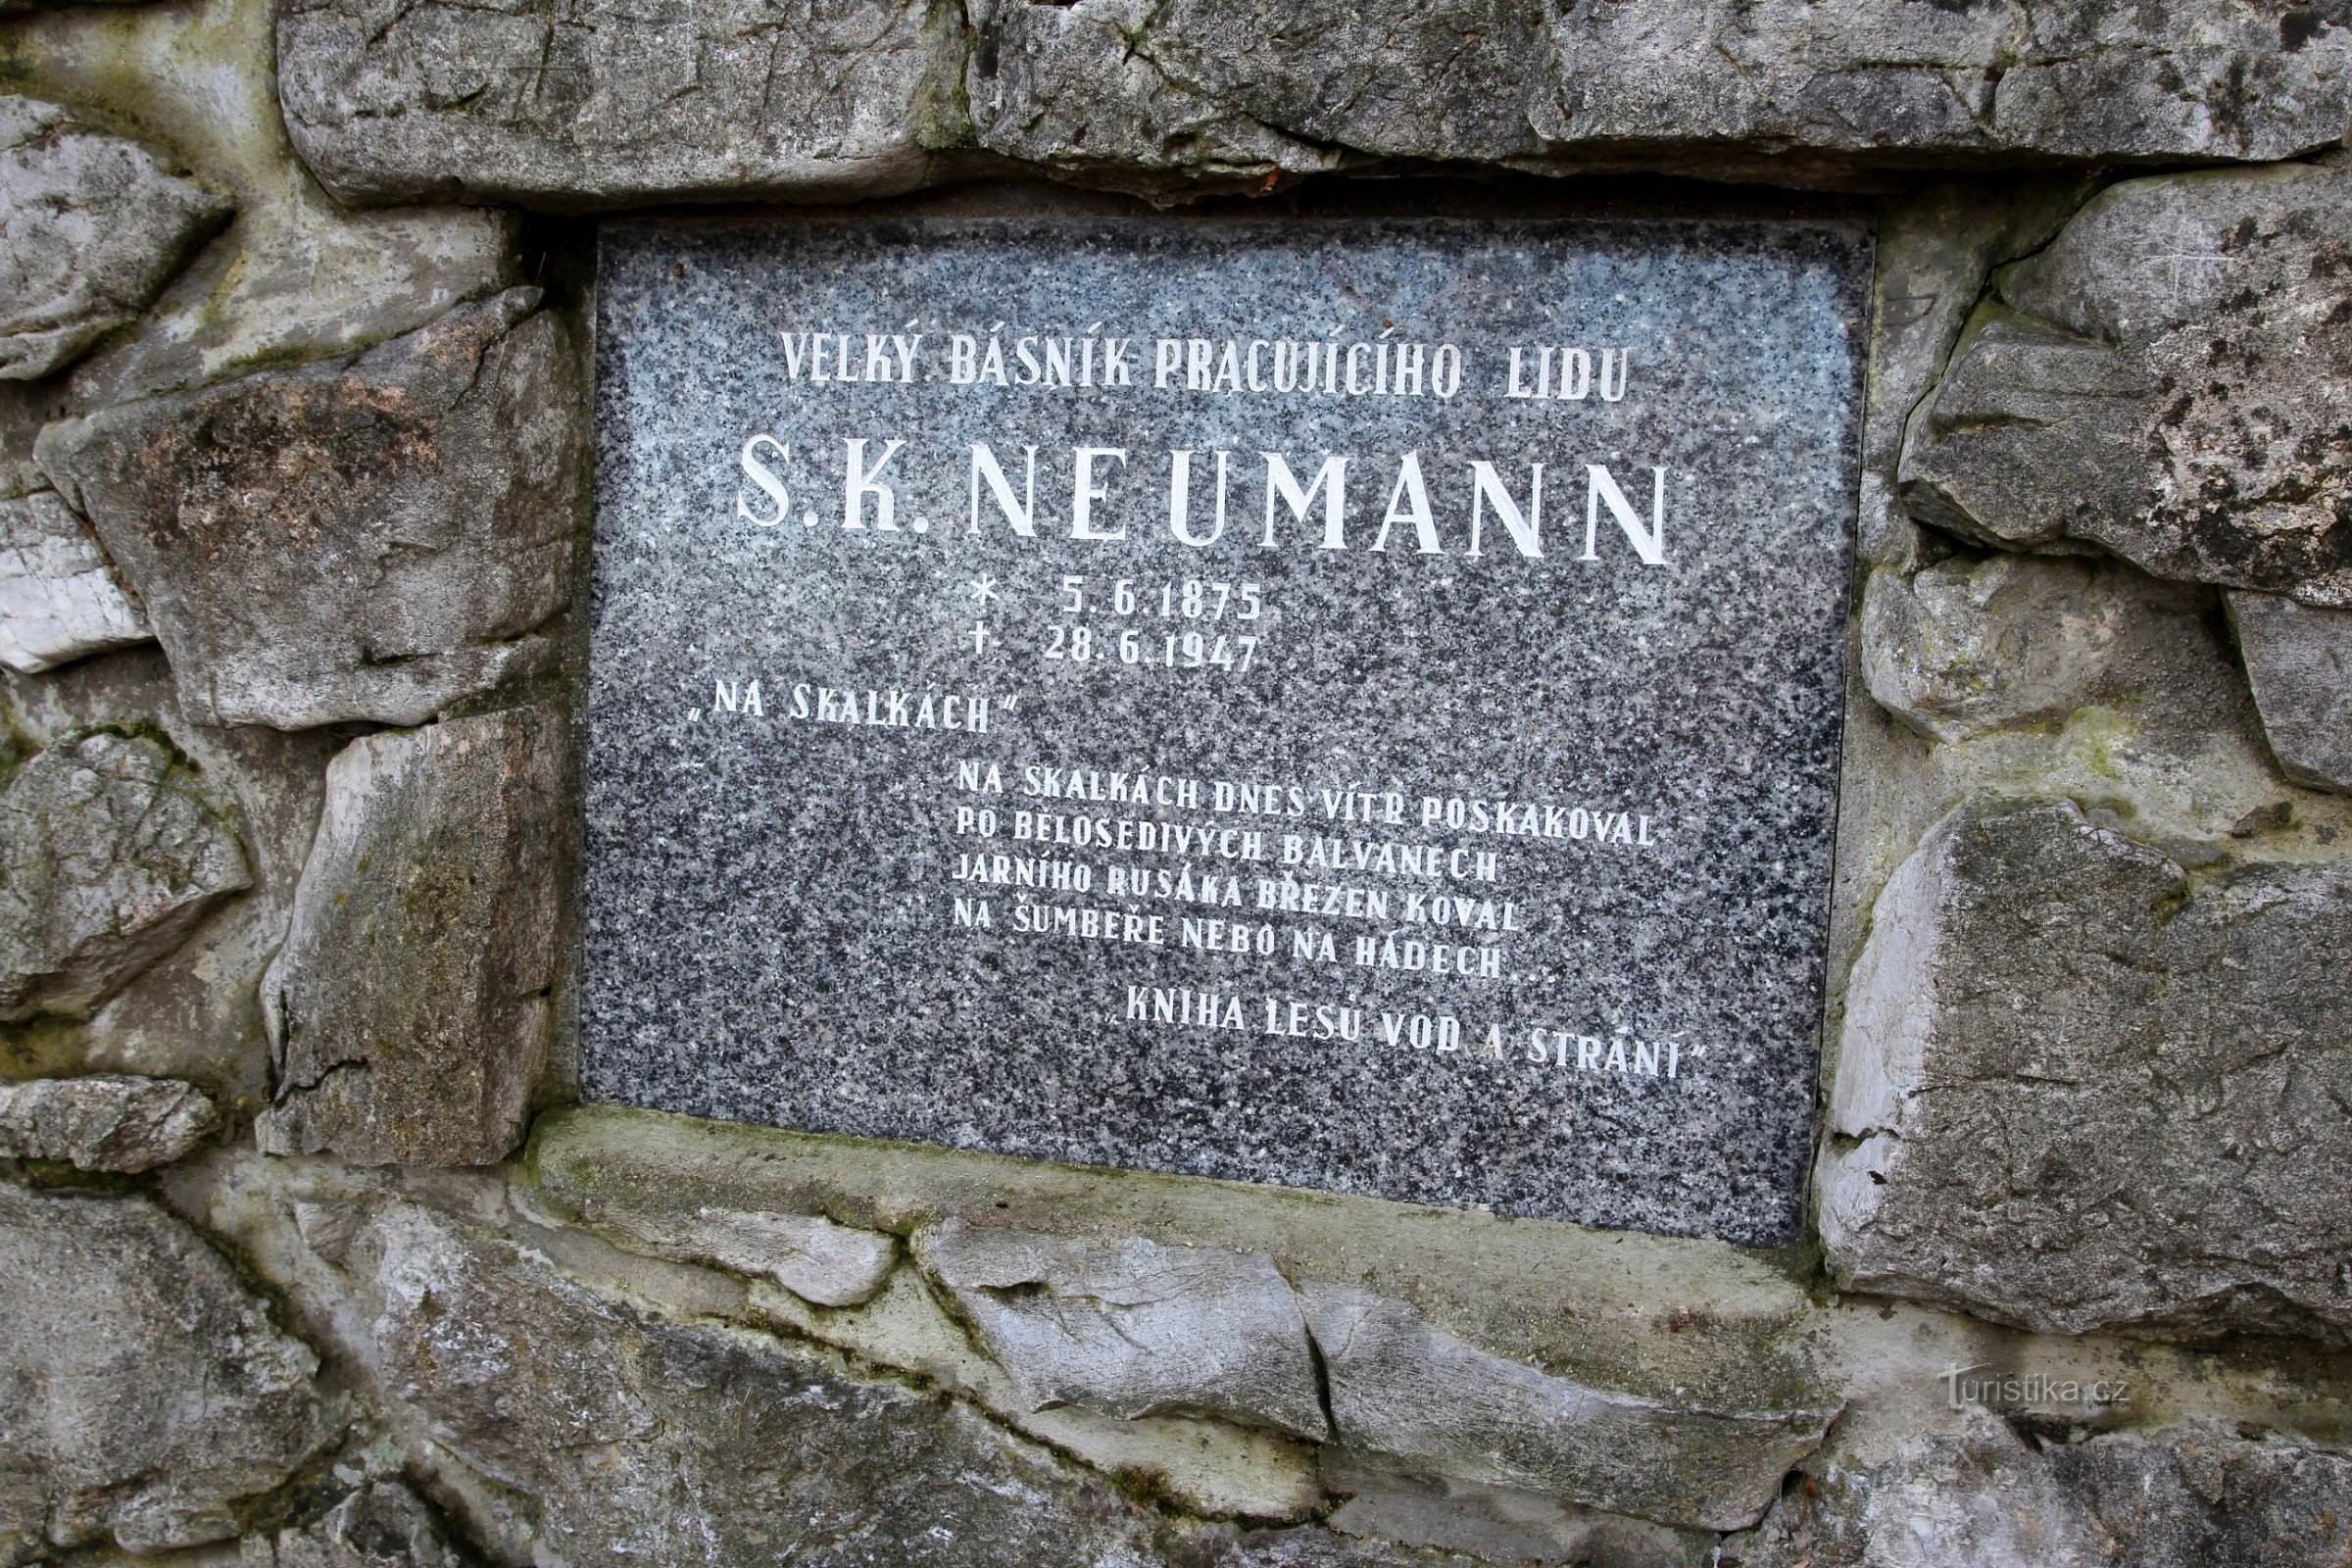 Monument to SK Neumann